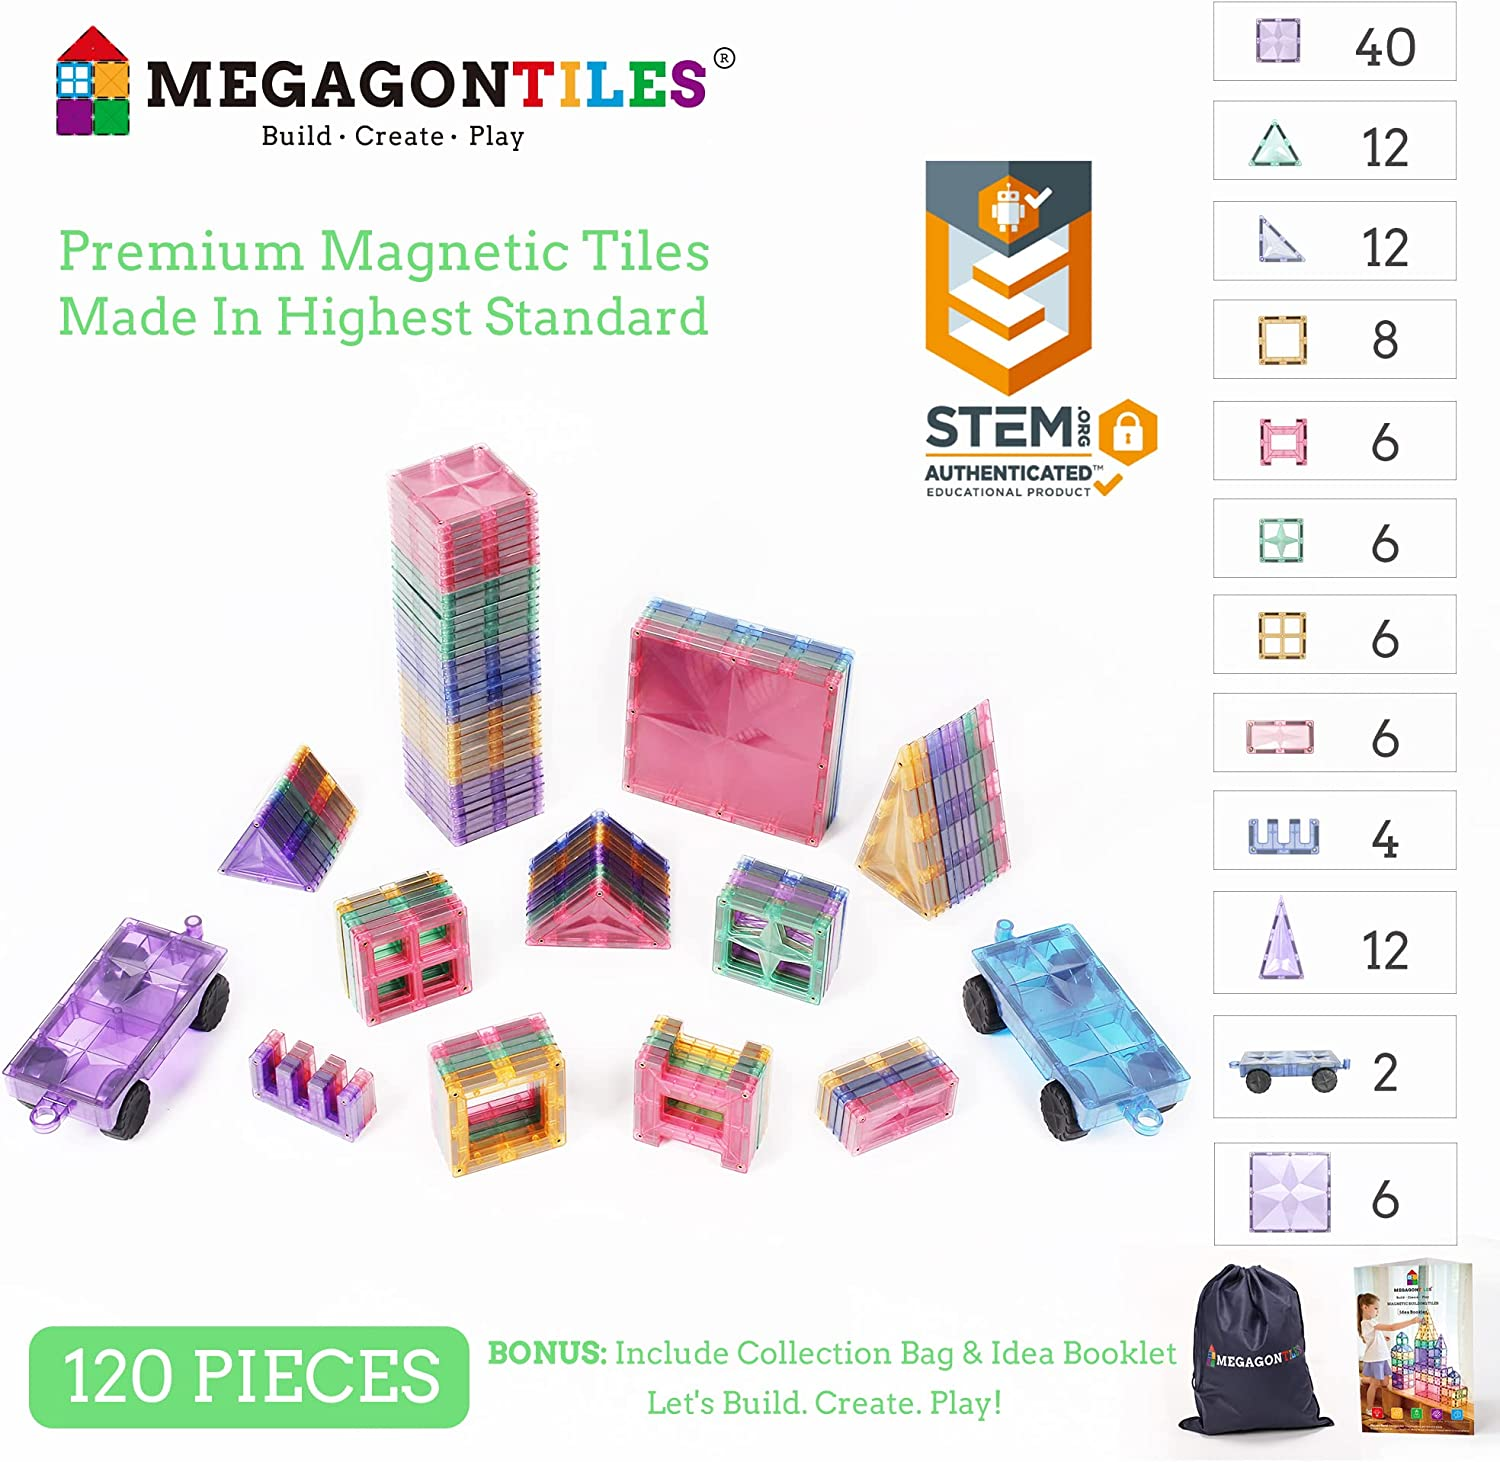  MEGAGONTILES 110PCS Premium Magnetic Tiles, STEM AUTHENTICATED, Magnetic Toys Building Blocks, Toddler Boys Girls 3-10 Year Old